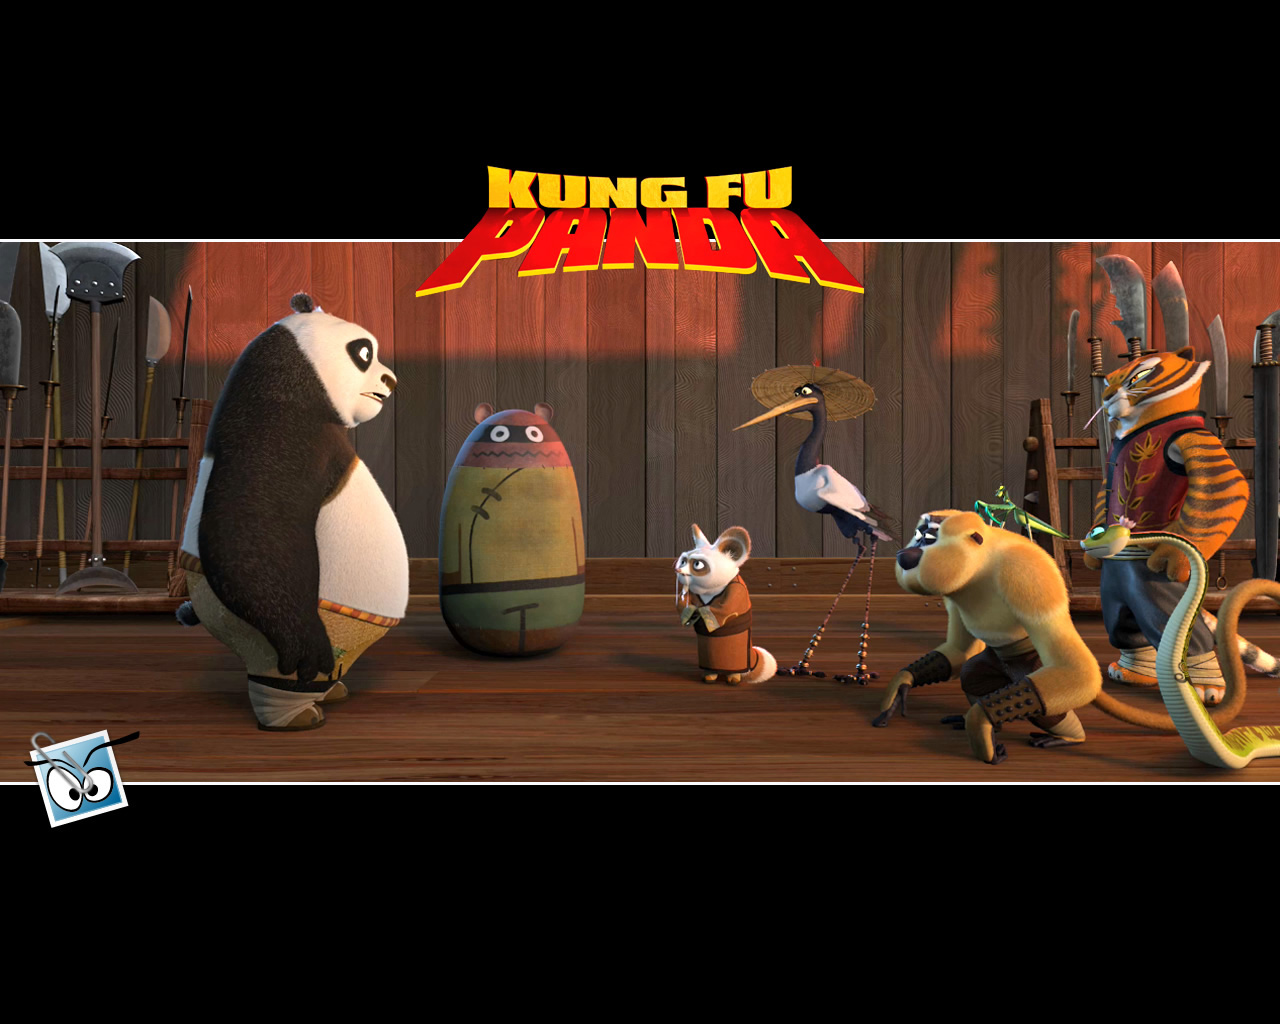 download wallpaper: Kung-fu Panda wallpaper